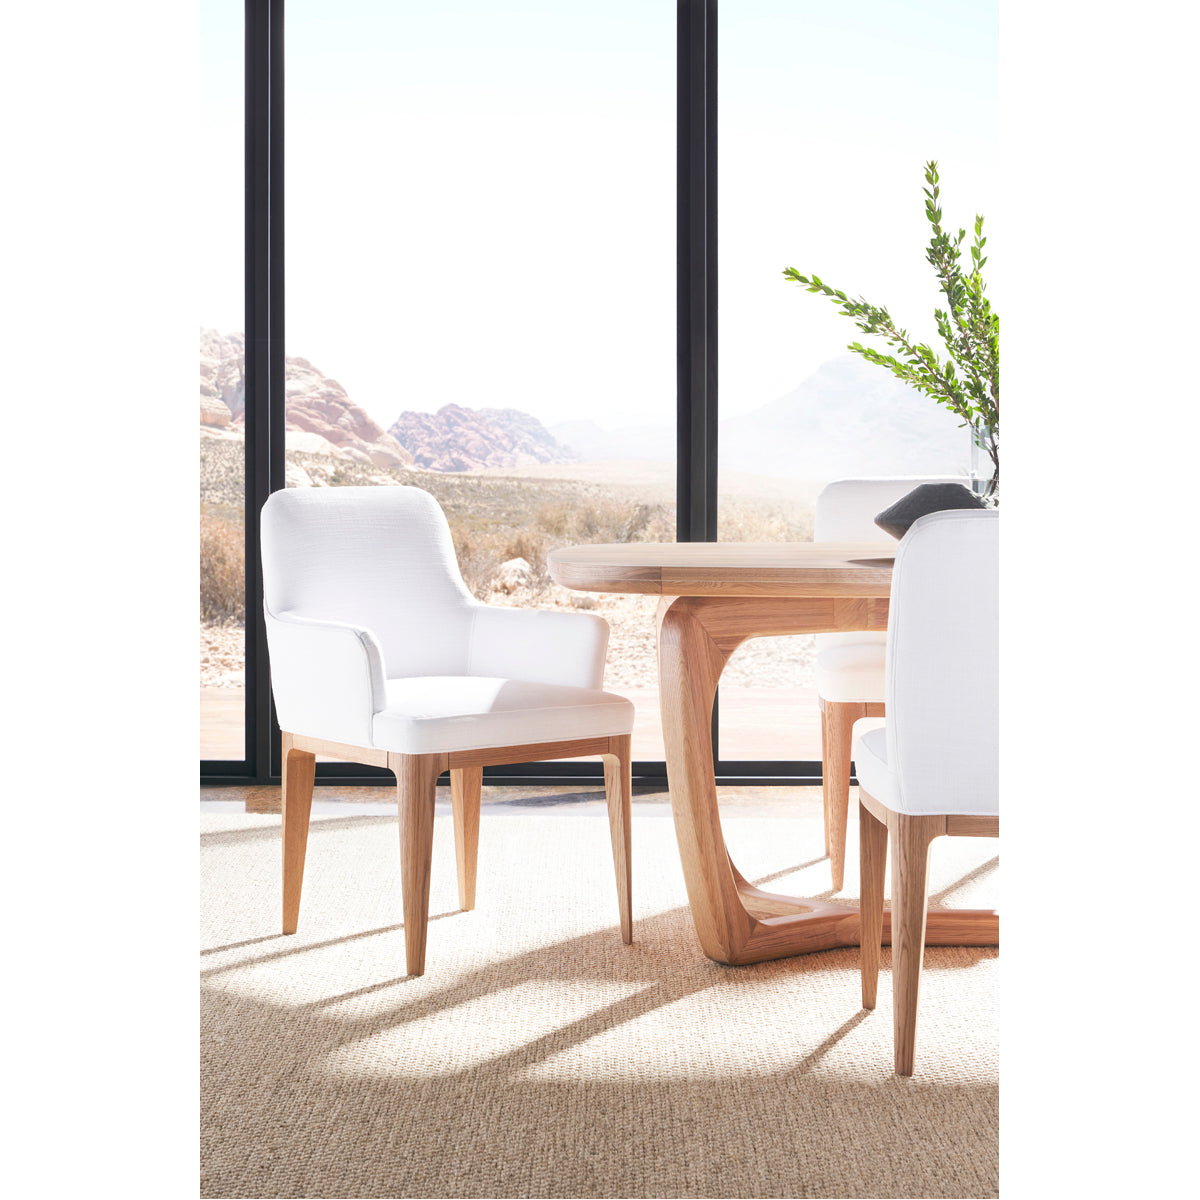 Vanguard Furniture Form Trestle Dining Table